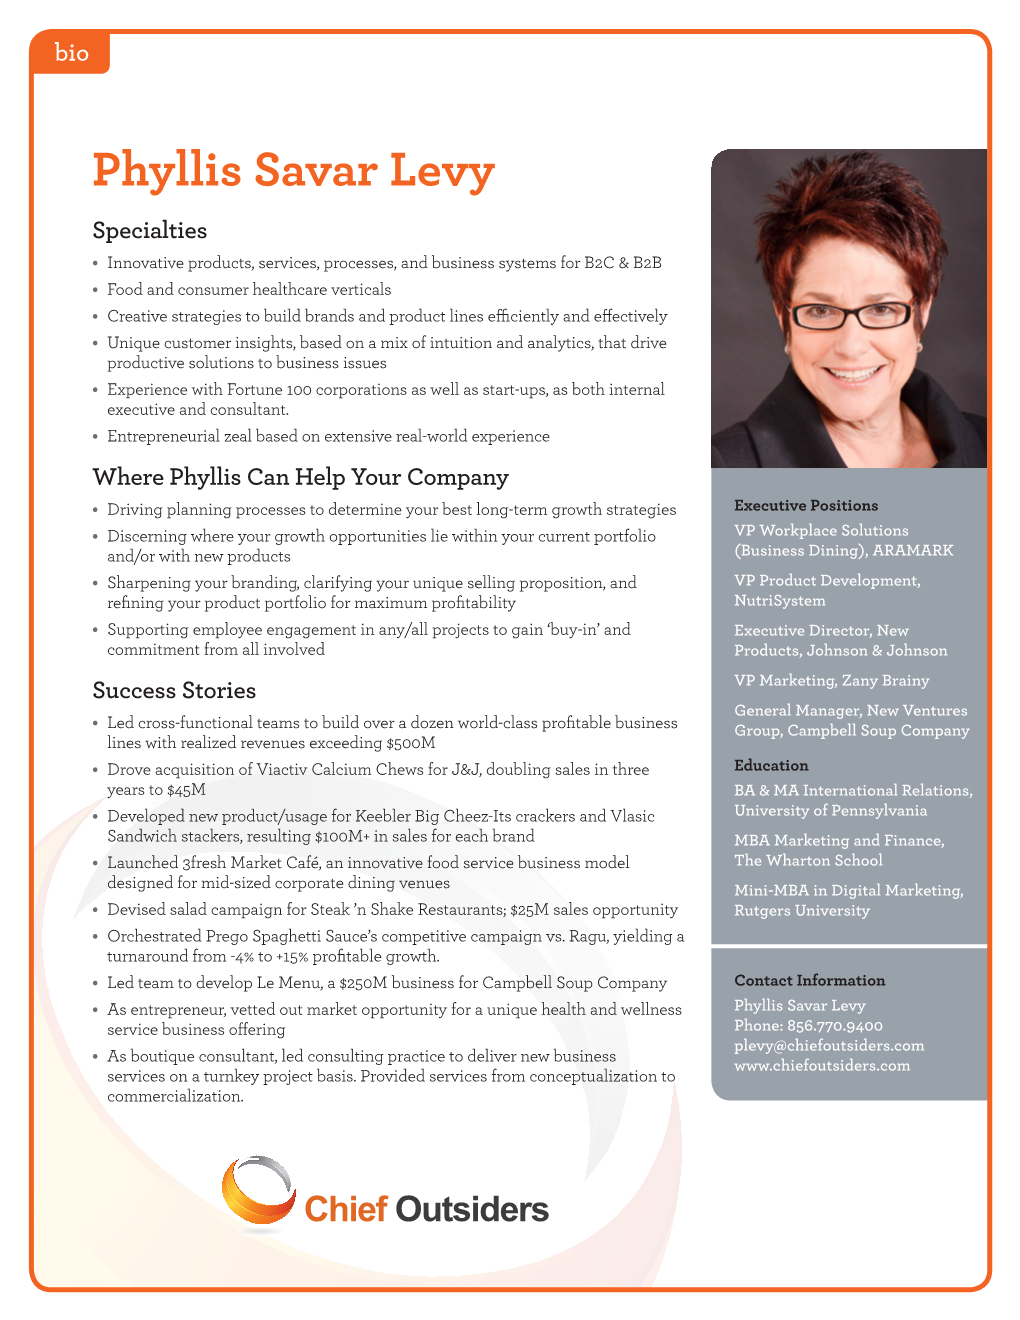 Phyllis Savar Levy